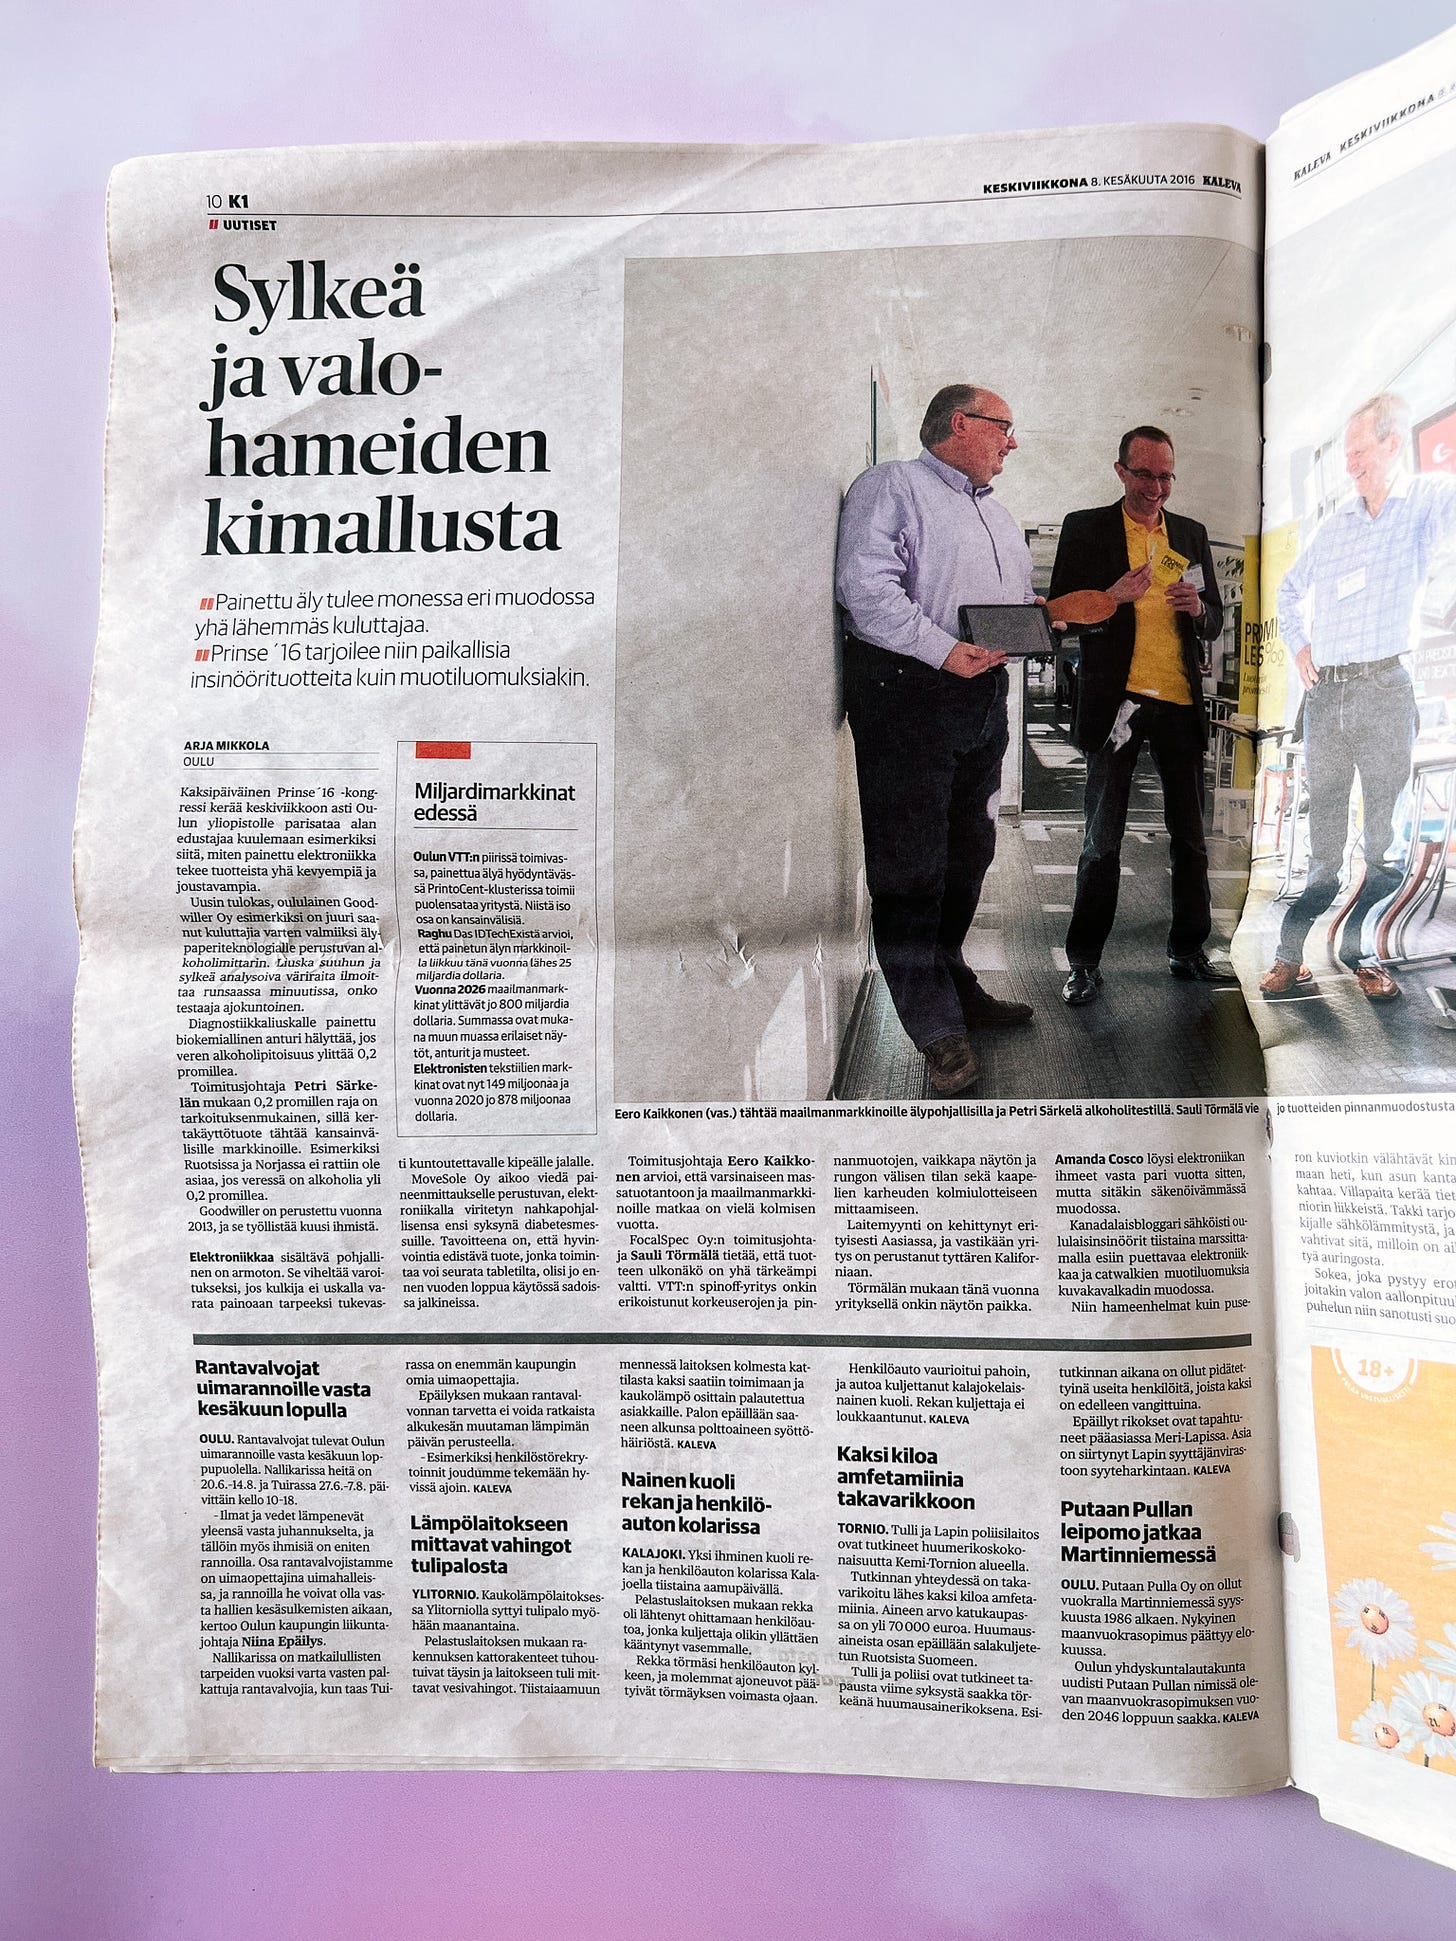 Clipping from Finnish newspaper Kaleva